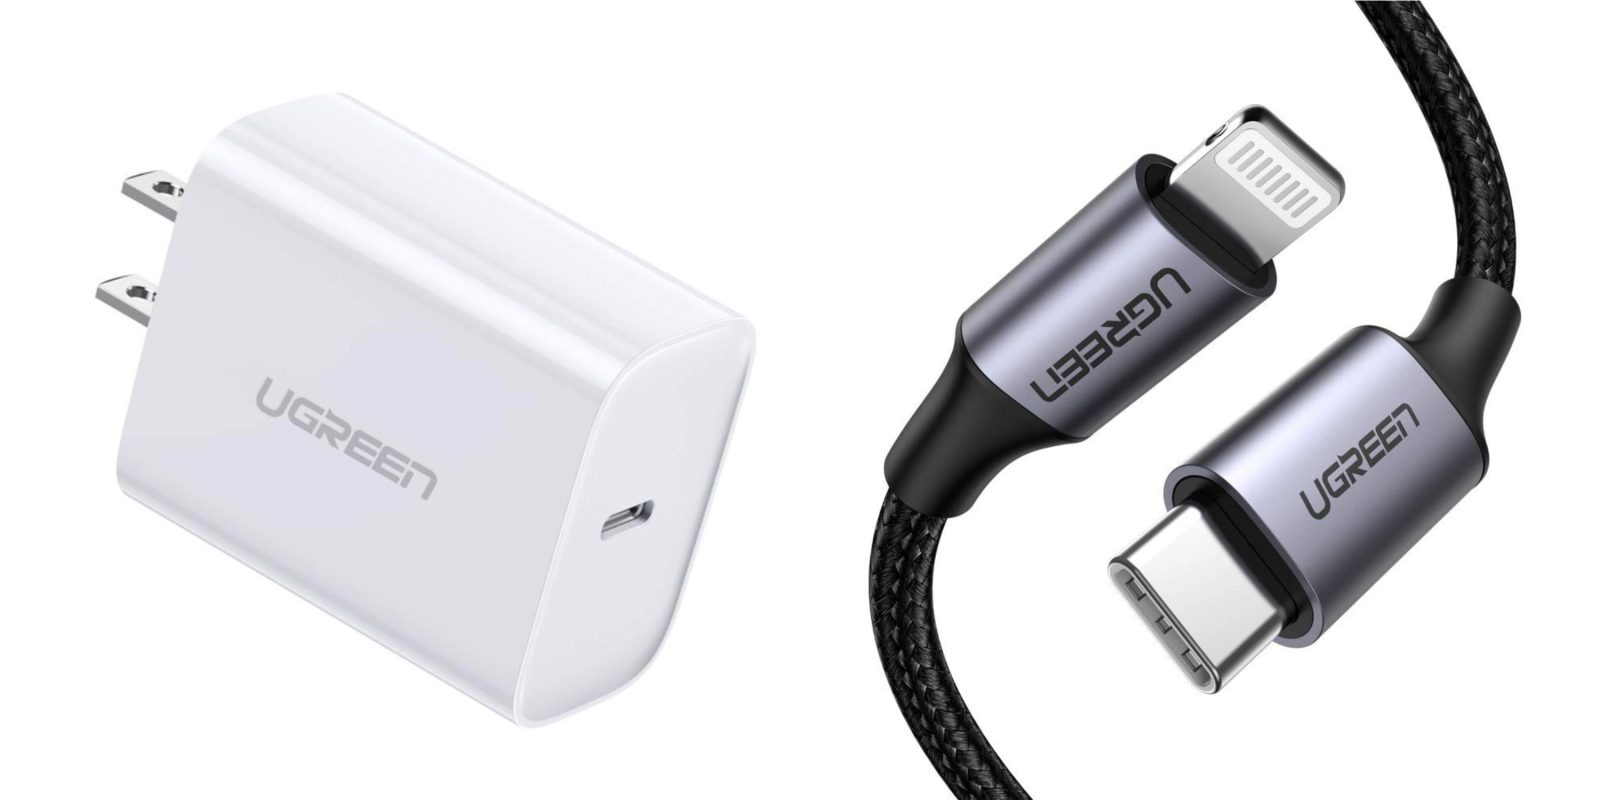 Ugreen Apple USB-C charger alternative